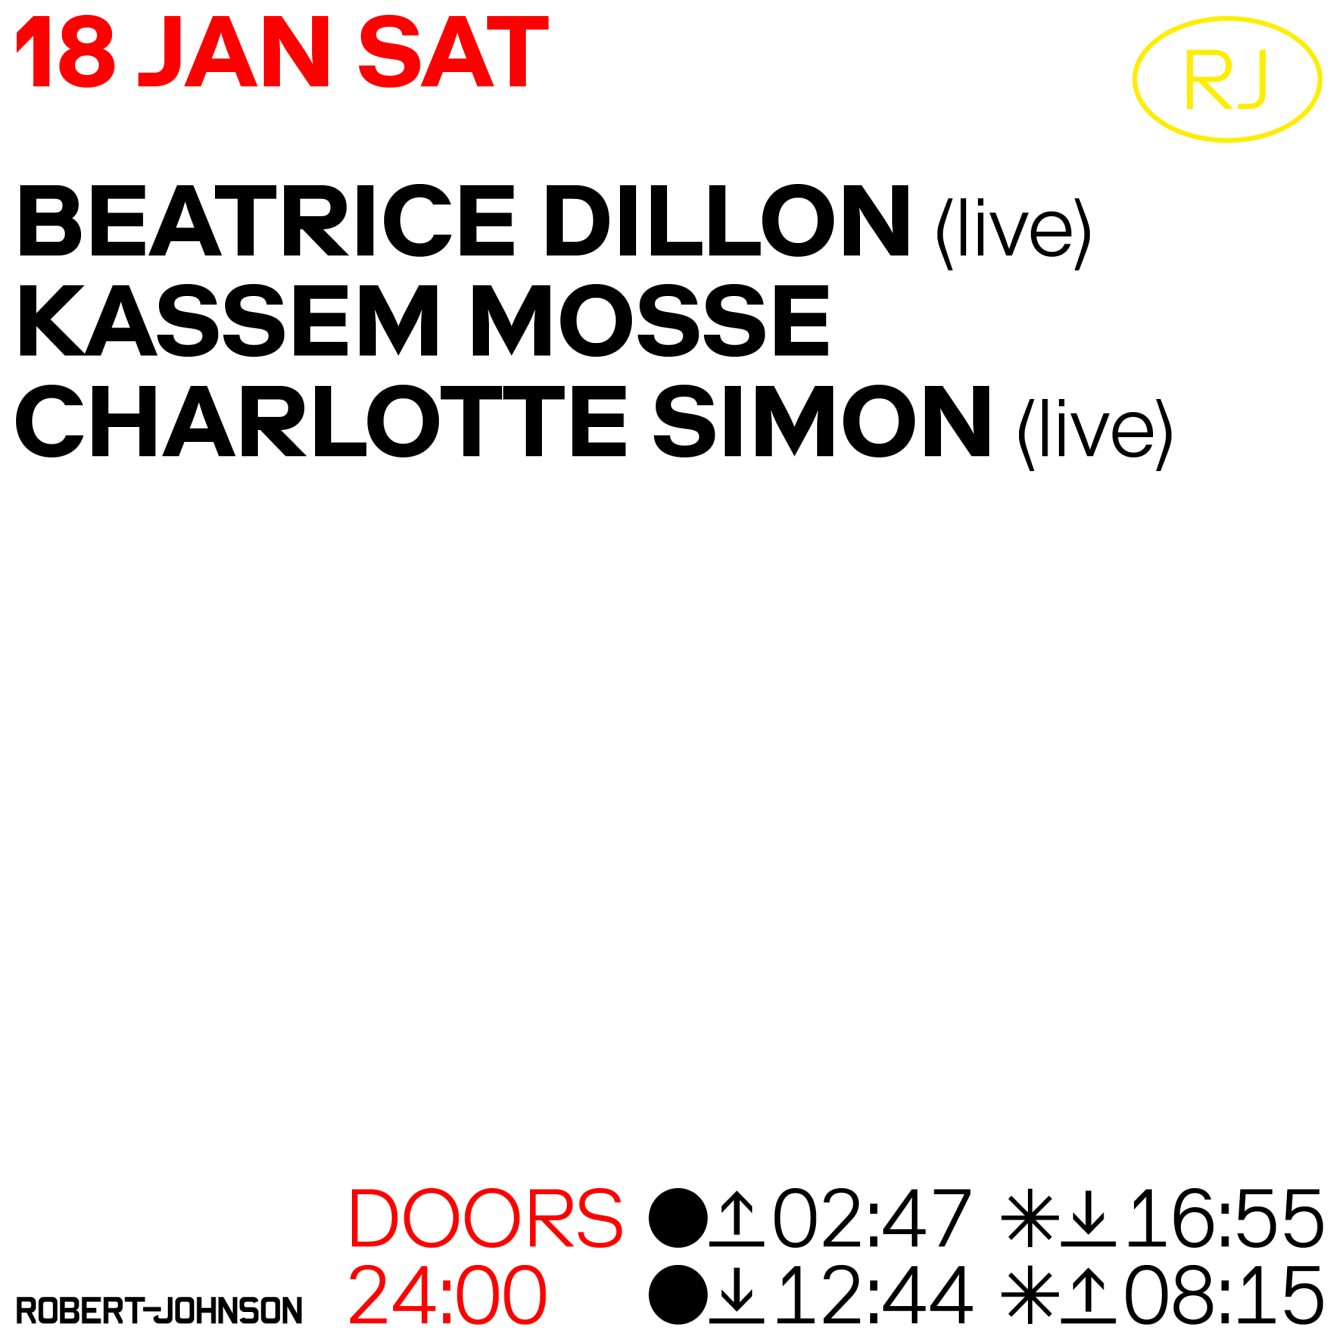 Beatrice Dillon (Live), Kassem Mosse, Charlotte Simon (Live) - Flyer front